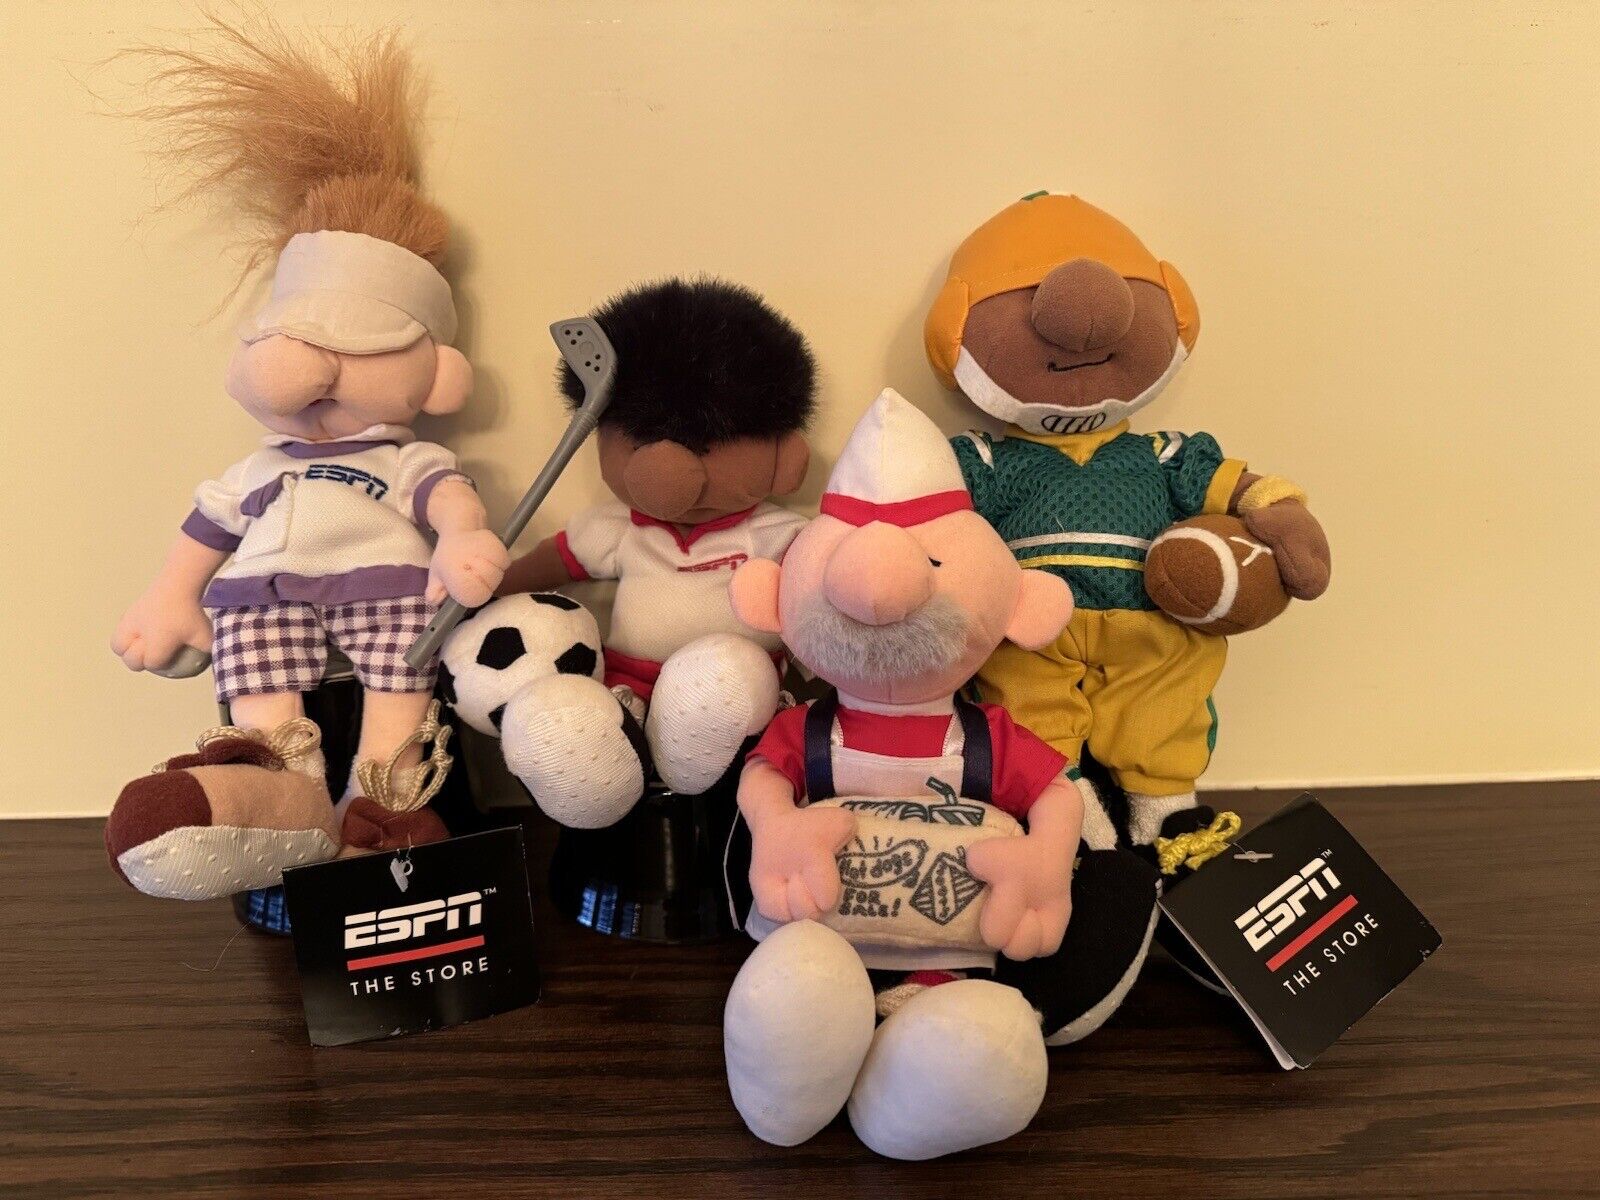 ESPN The Store Bean Bag Plush Golf Girl, Football, Soccer, & RARE Hot Dog Vendor